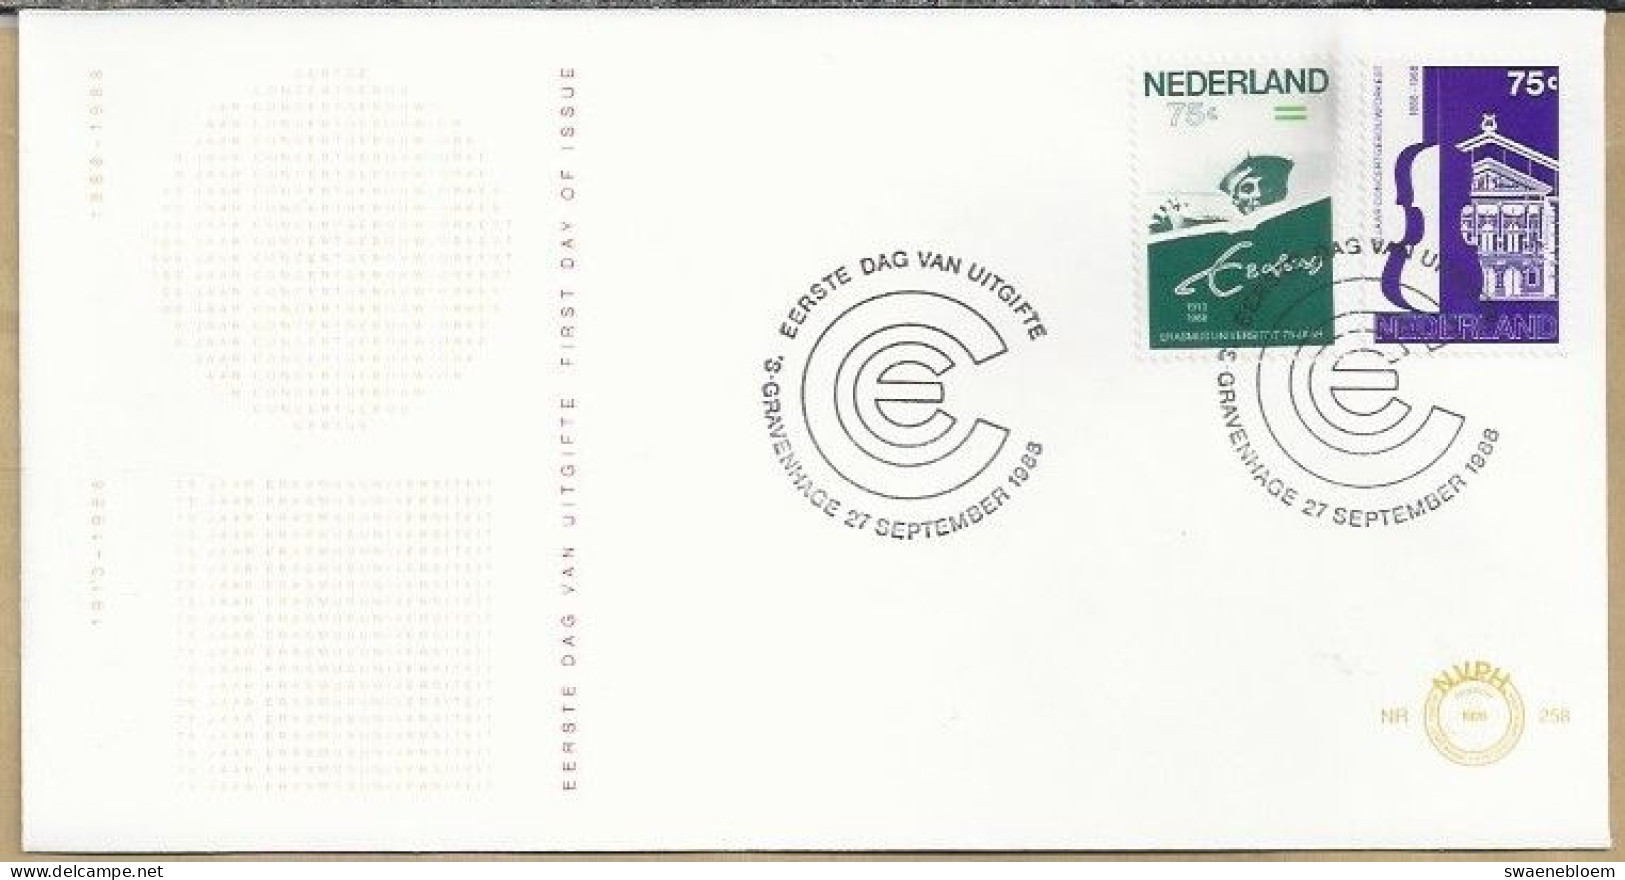 NL.- FDC. NVPH Nr. 258. EERSTE DAG VAN UITGIFTE. FIRST DAY OF ISSUE. 27-09-1988. ERASMUS UNIVERSITEIT 75 JAAR. CONCERT - FDC